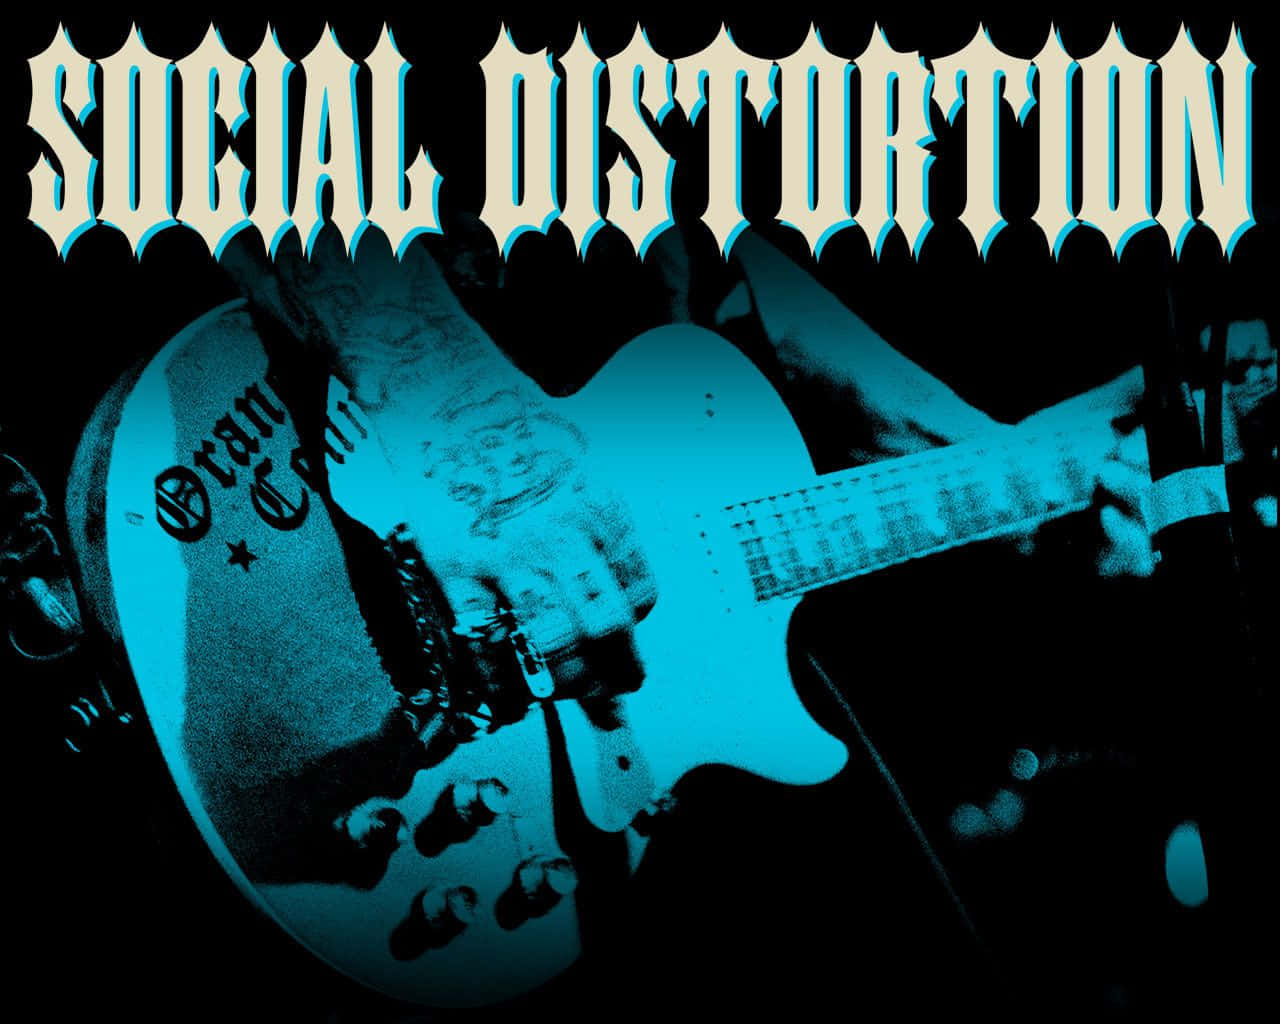 Iconicaband Di Punk Rock - Social Distortion In Concerto. Sfondo